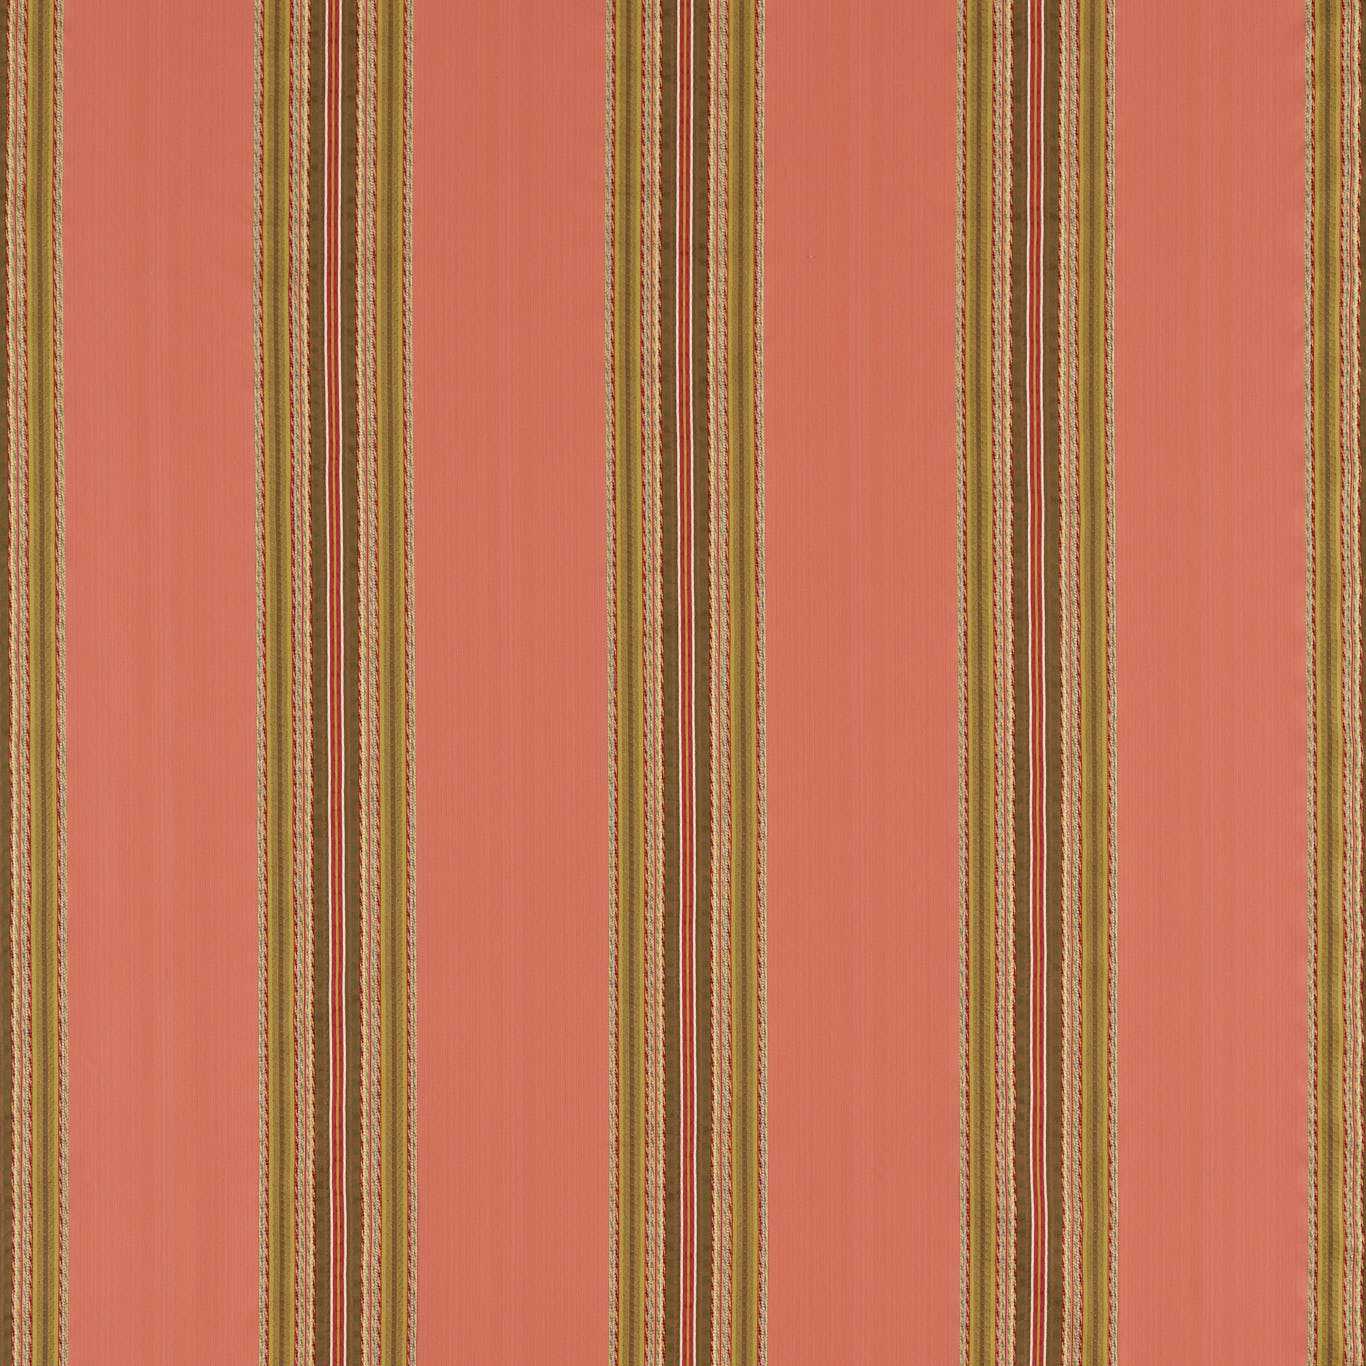 Lisere Stripe Venetian Red ZART333354